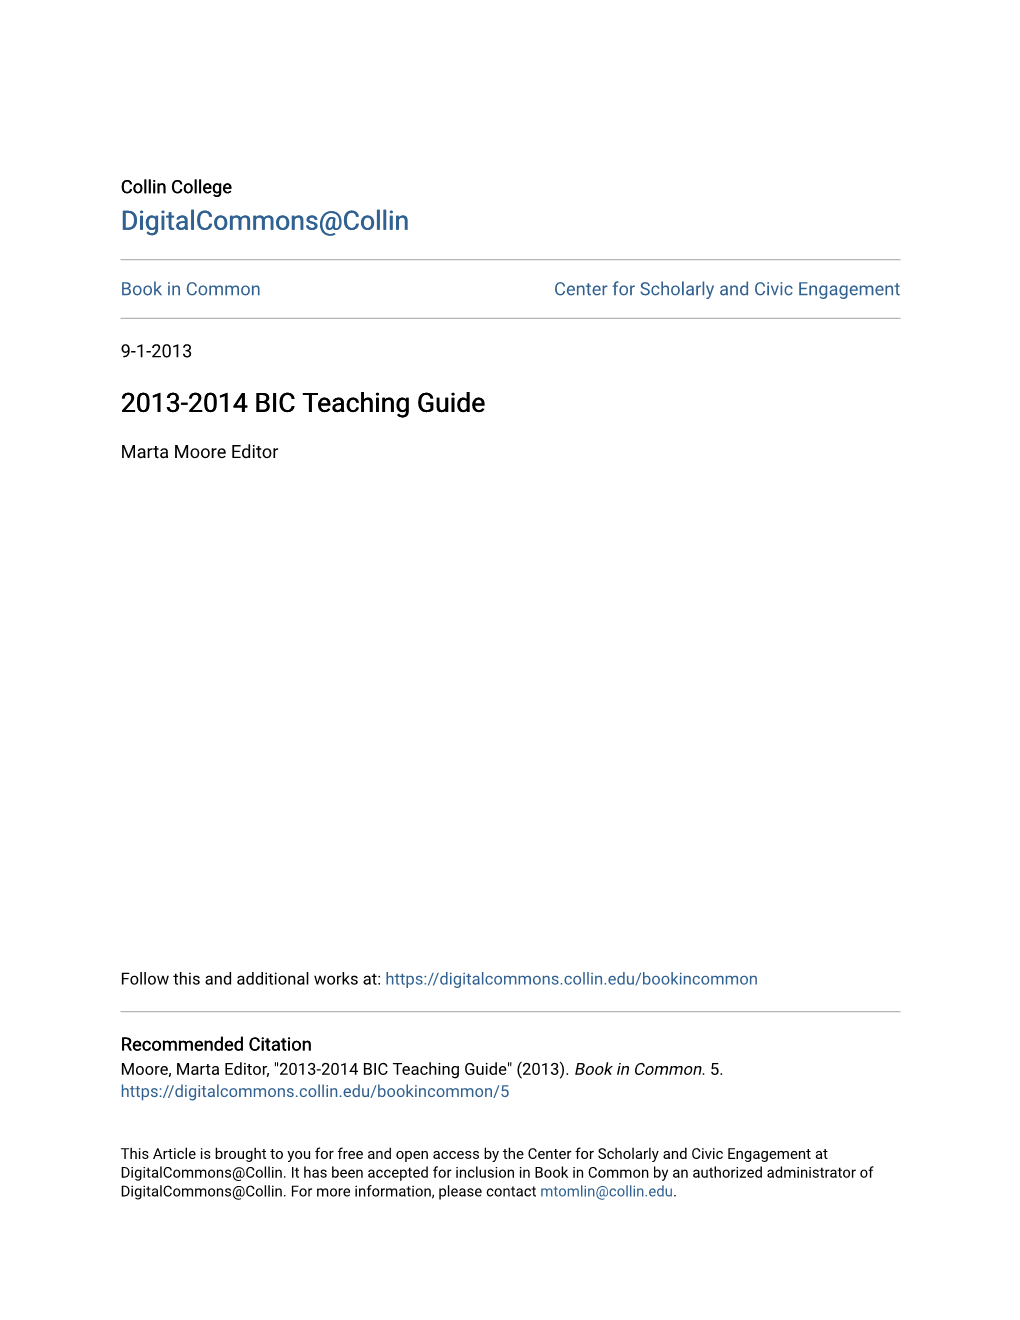 2013-2014 BIC Teaching Guide